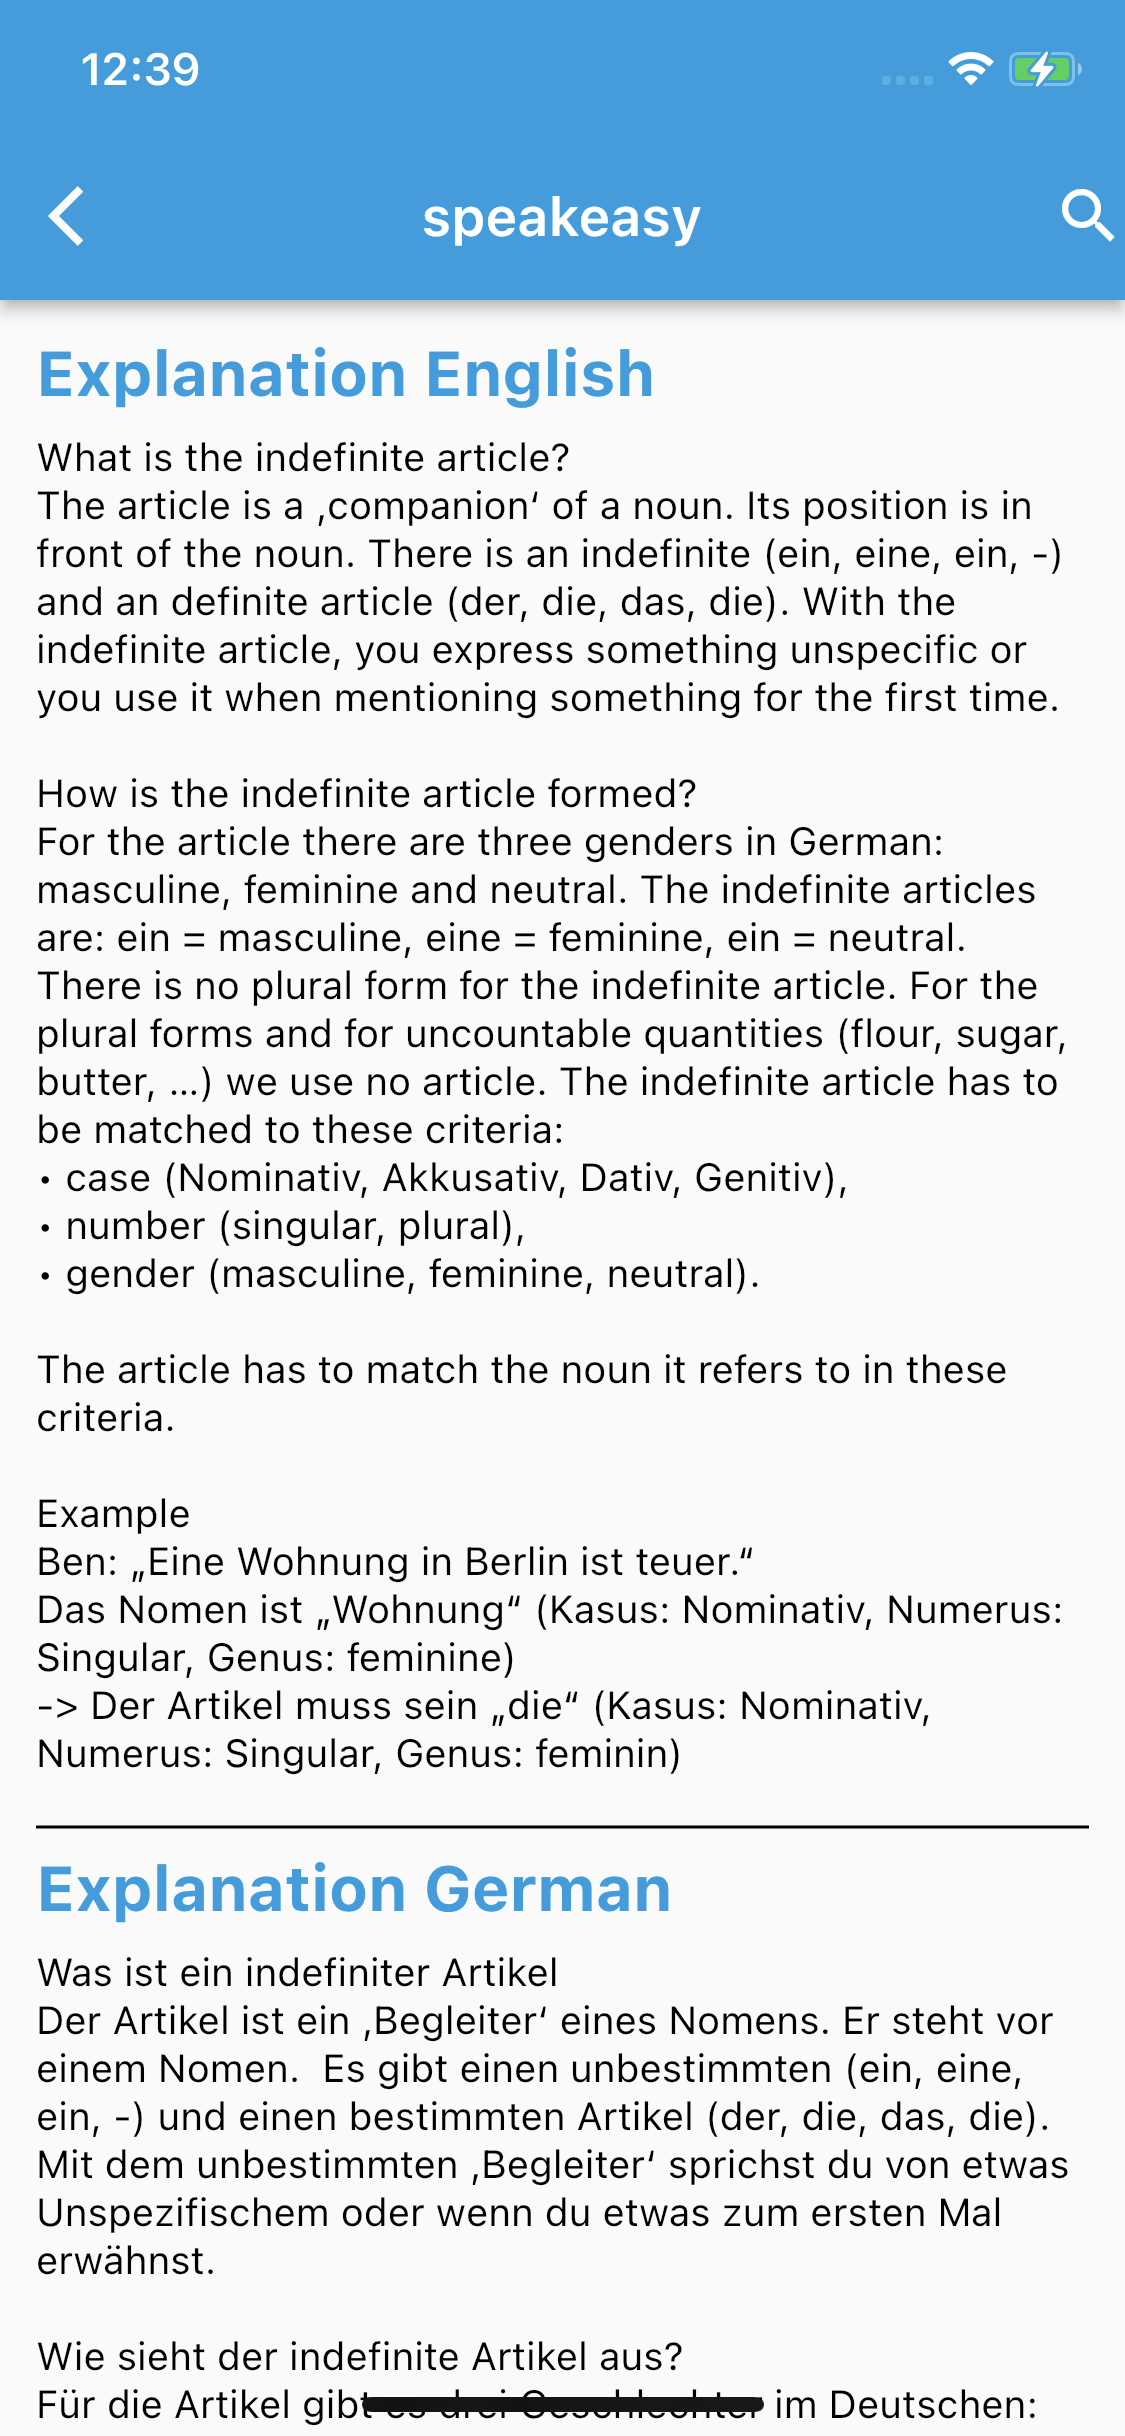 The speakeasy German Learning App